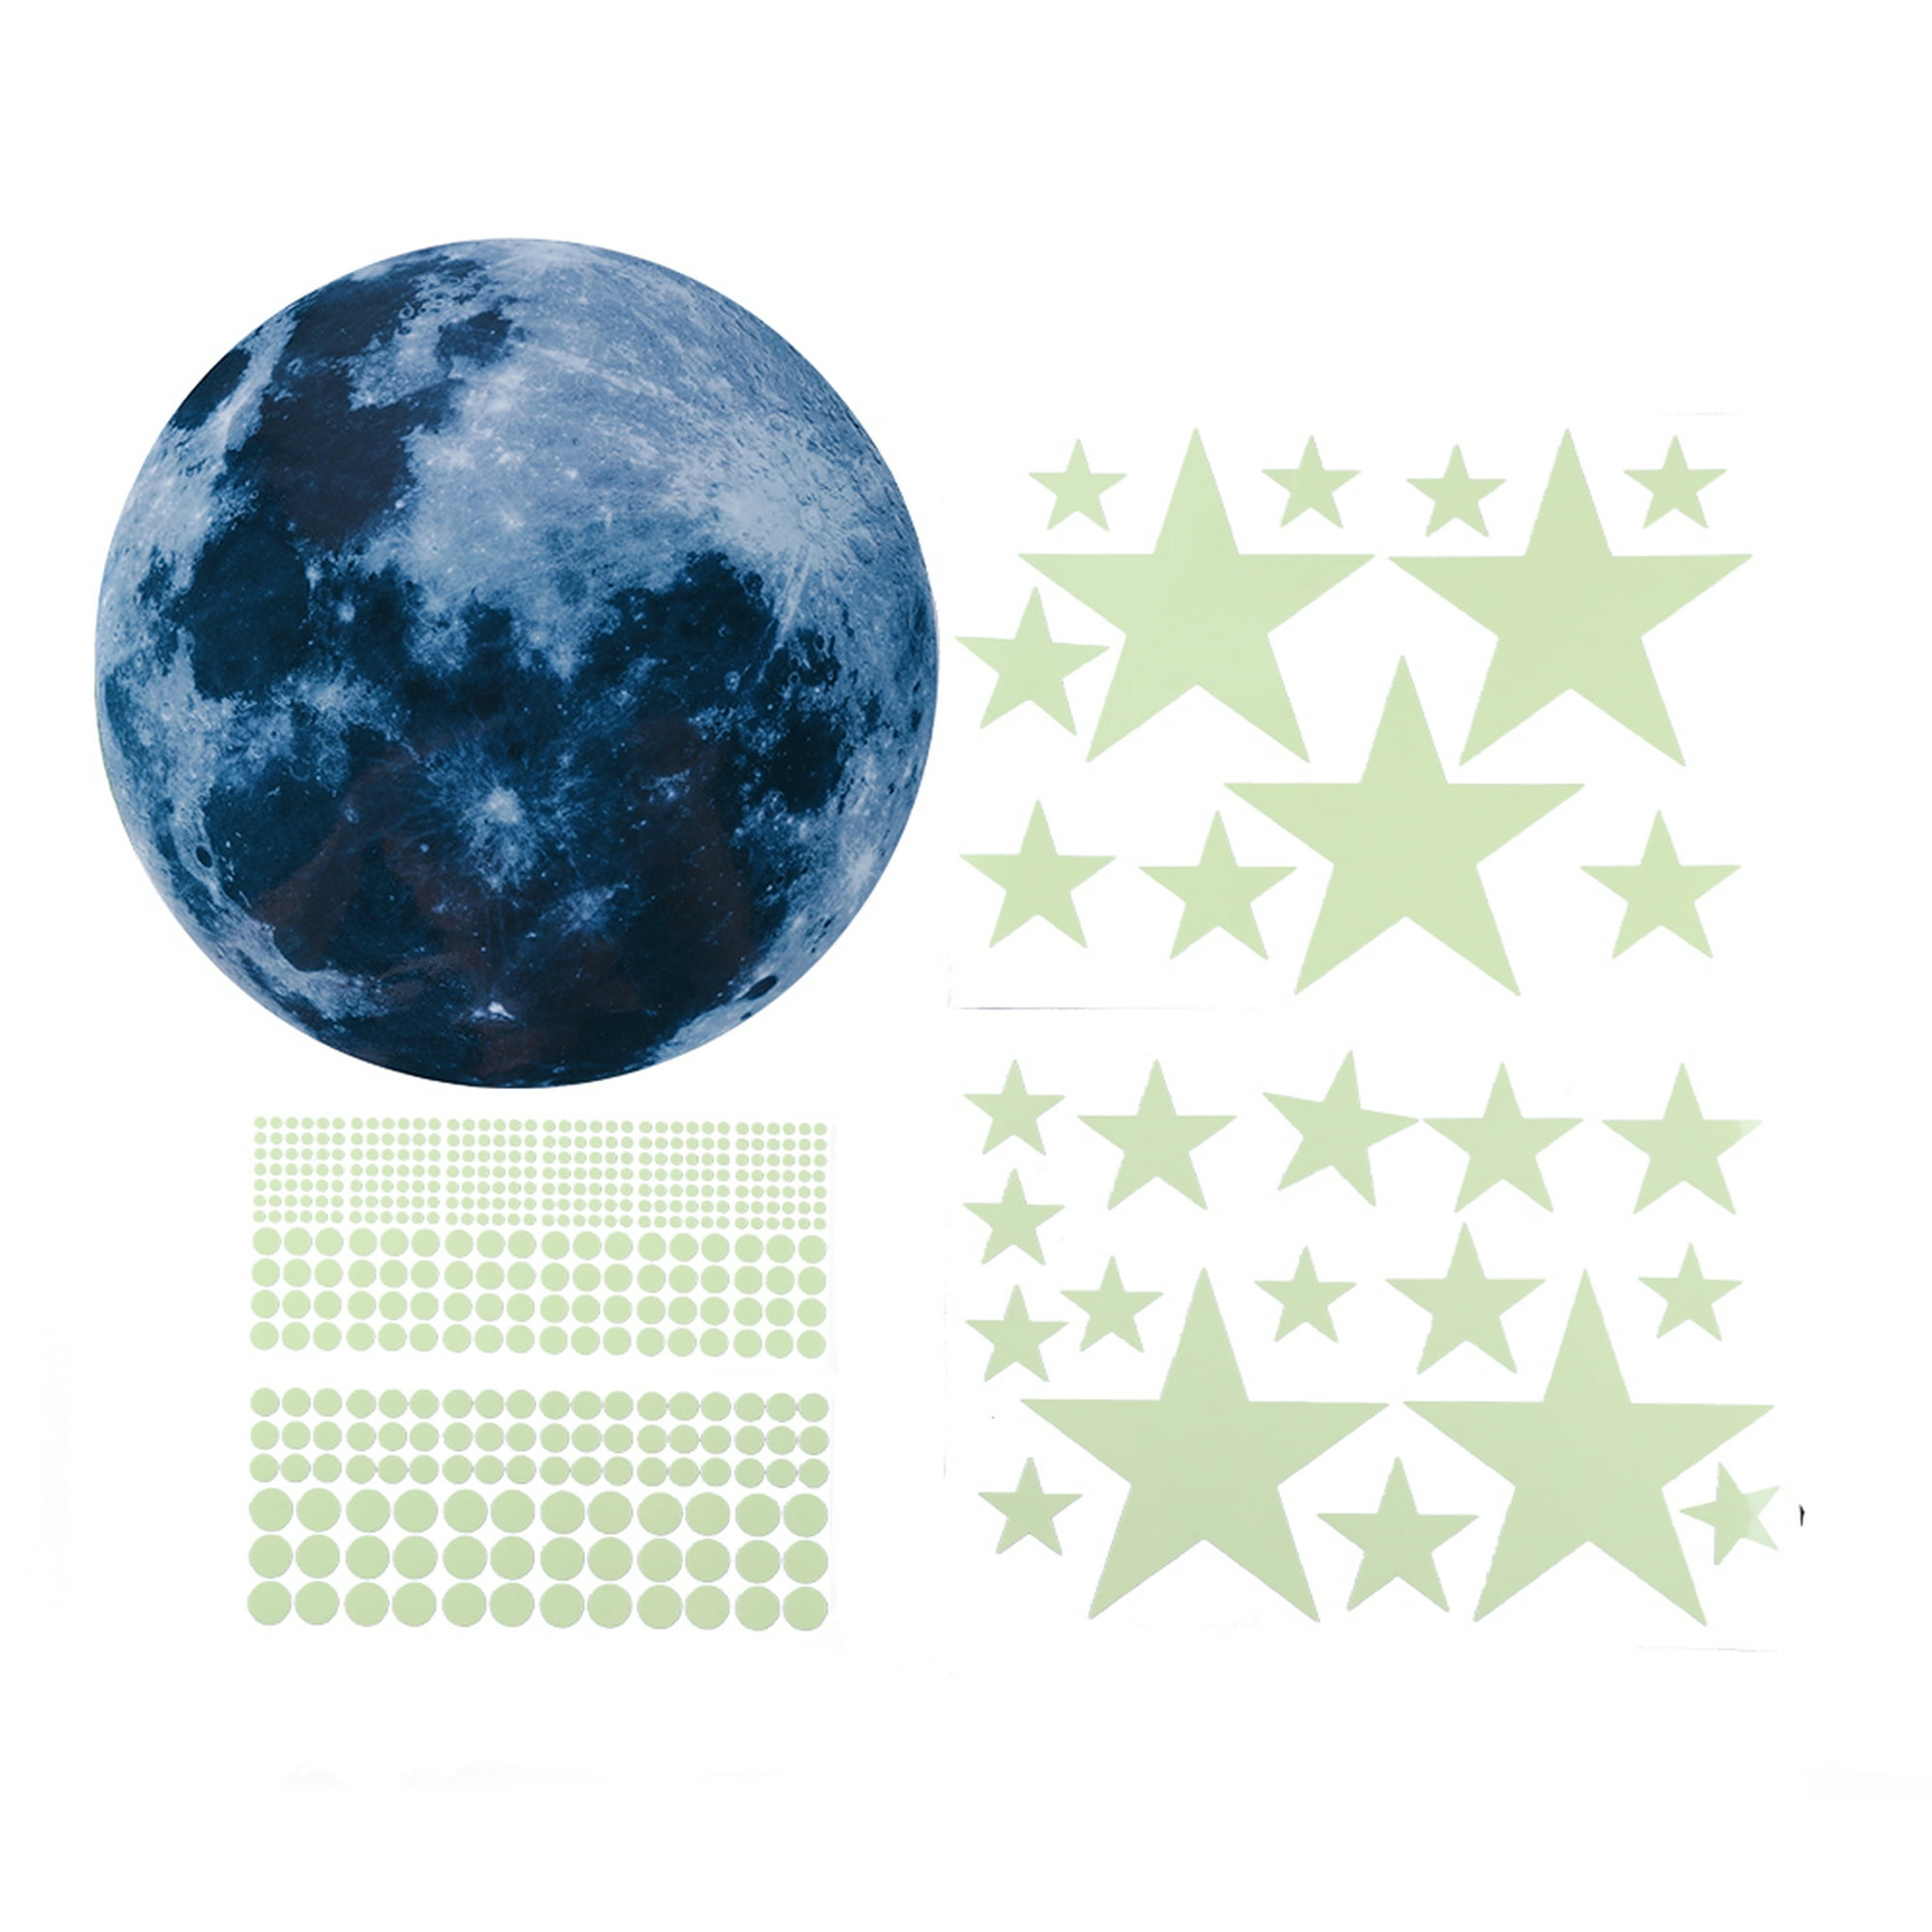 435 unids/set luminoso 3D estrella Luna punto pared pegatinas